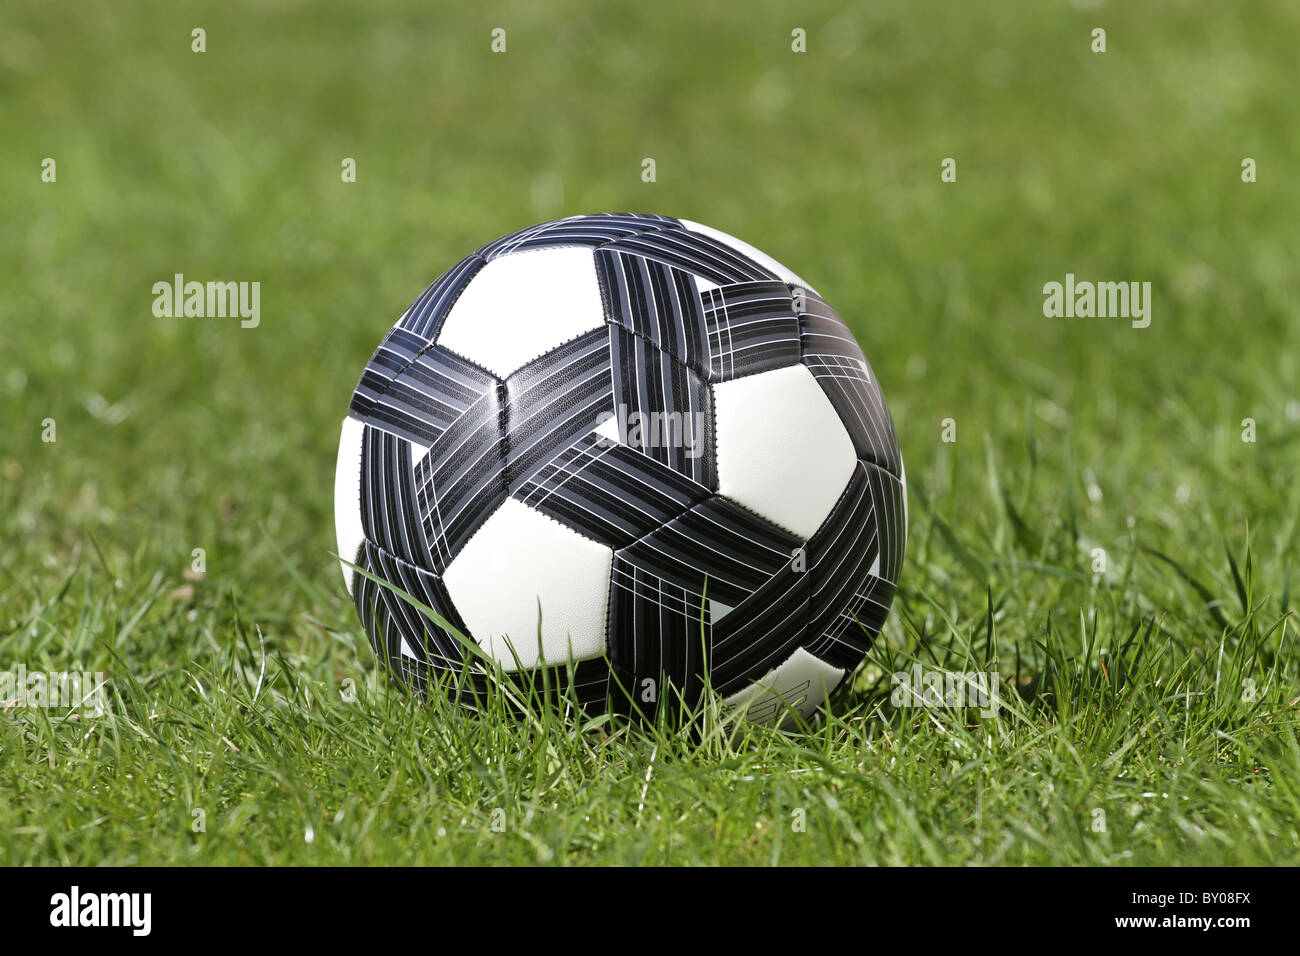 Soccerball Stock Photo